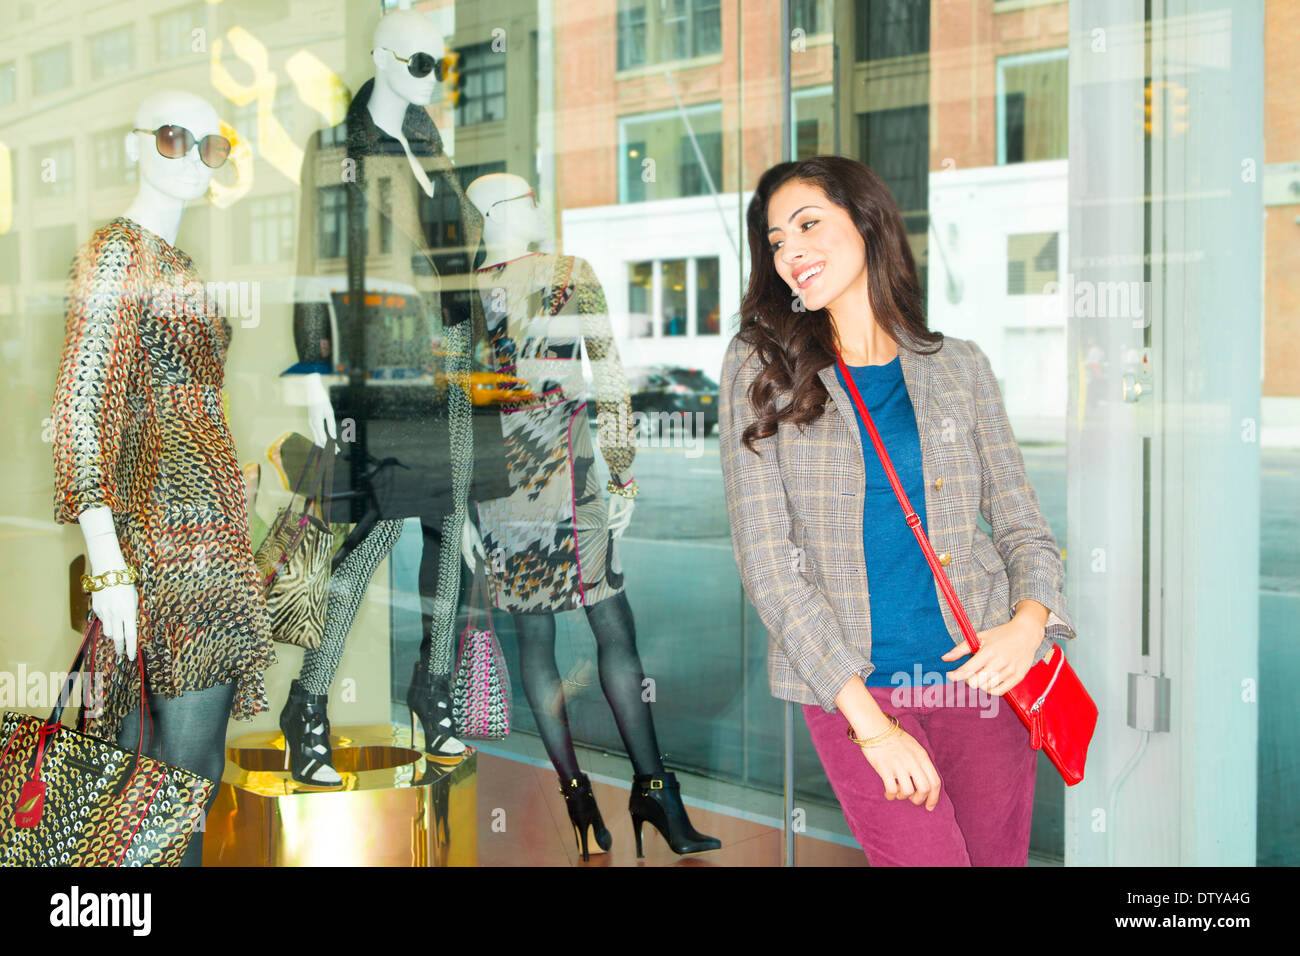 Mixed race woman window shopping in city Stock Photo